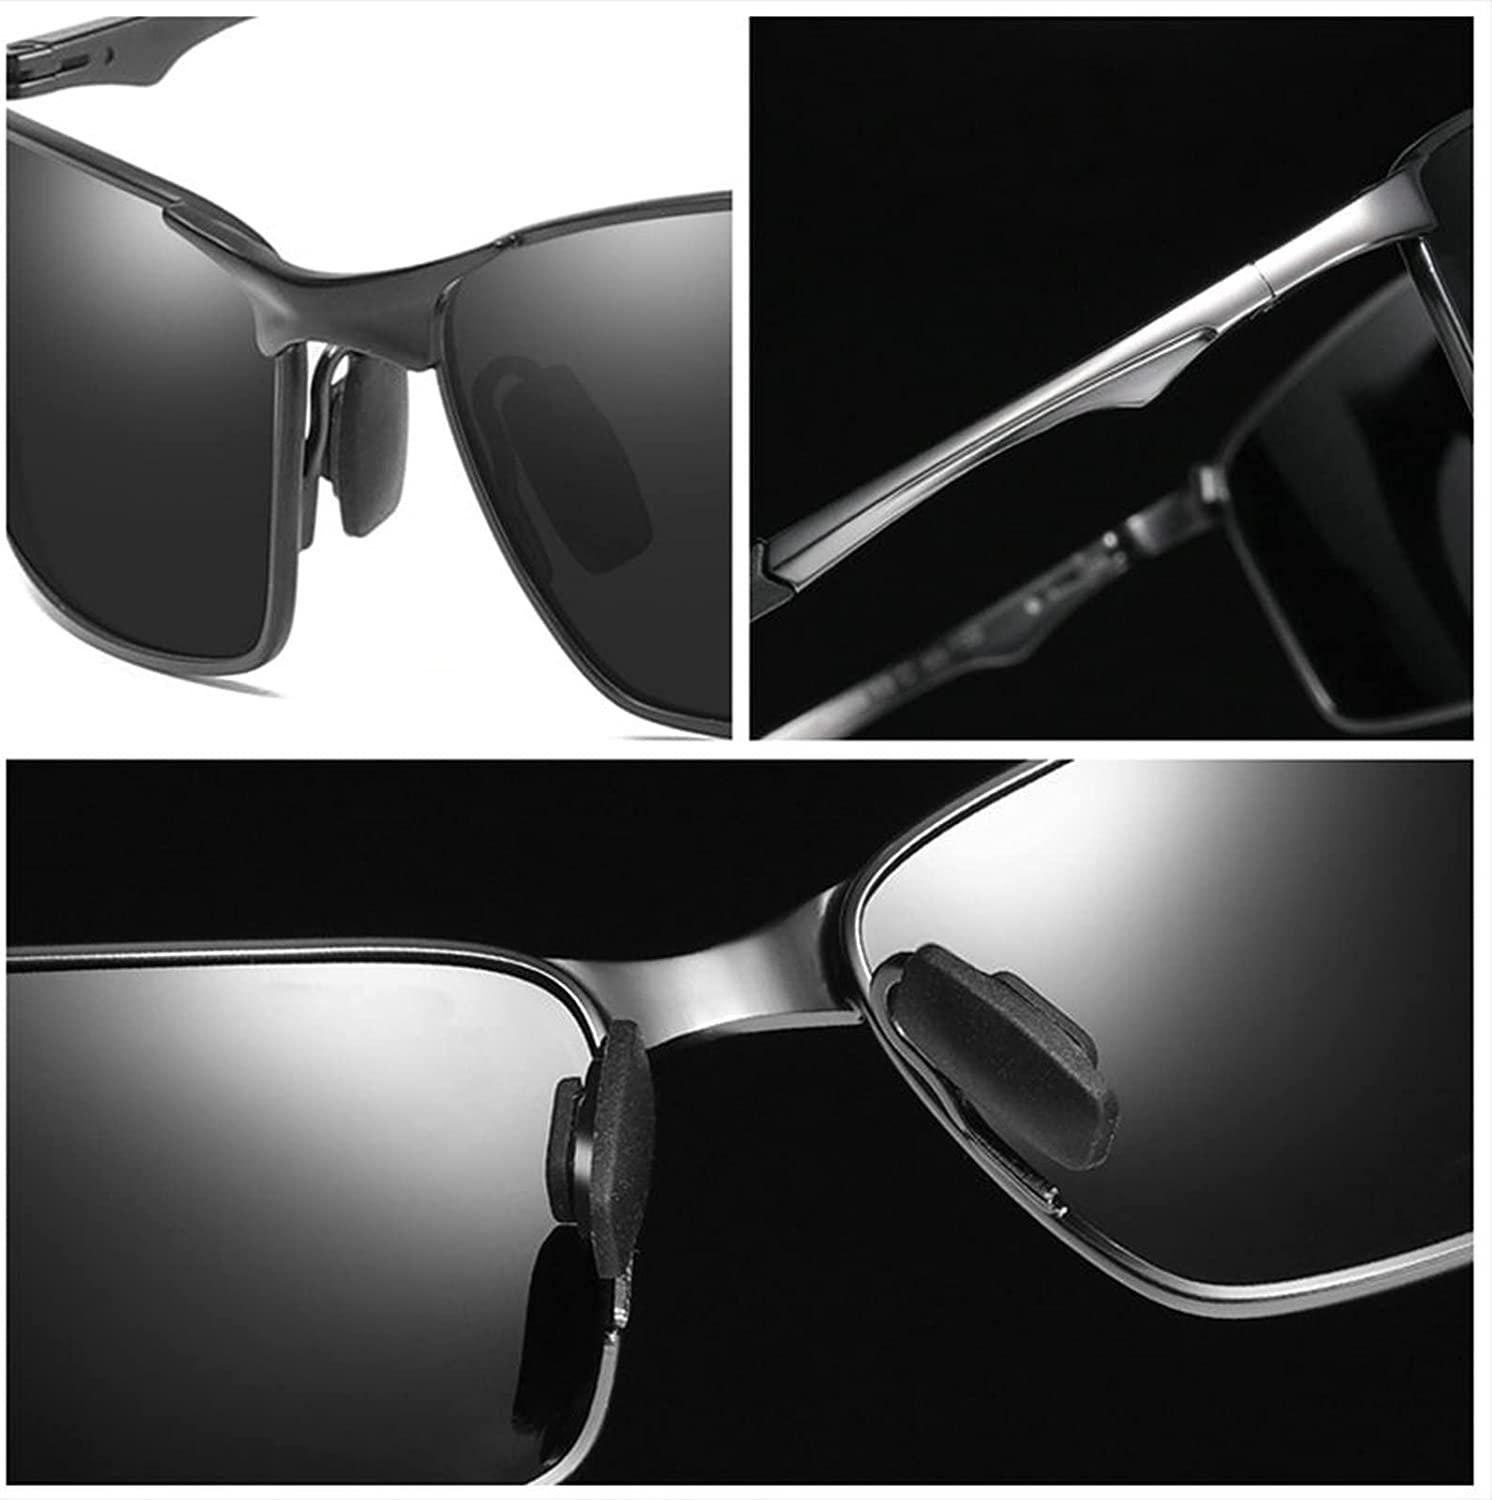 Sports Full Reading Sunglasses Men's Outdoor Driving Classic Reader  Presbyopic Goggles Sun Glasses Black 2.5 x